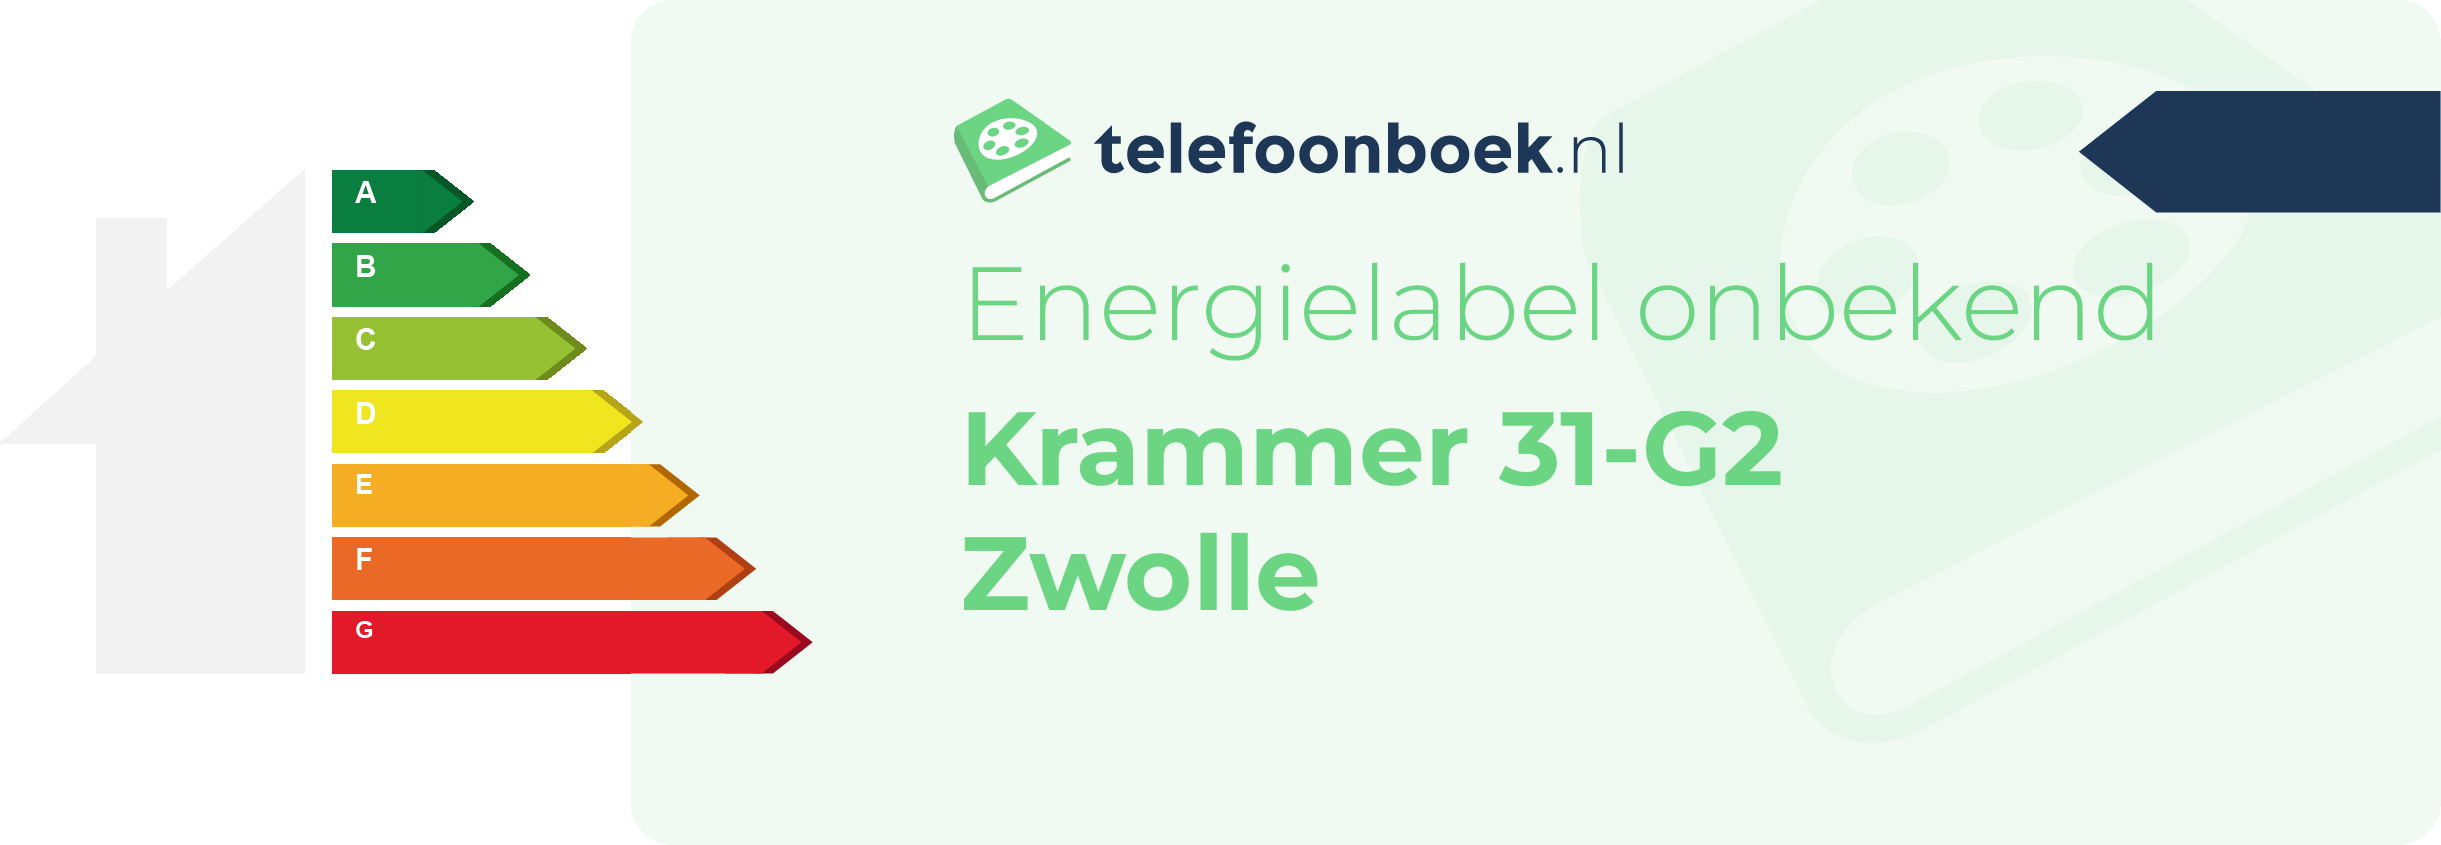 Energielabel Krammer 31-G2 Zwolle